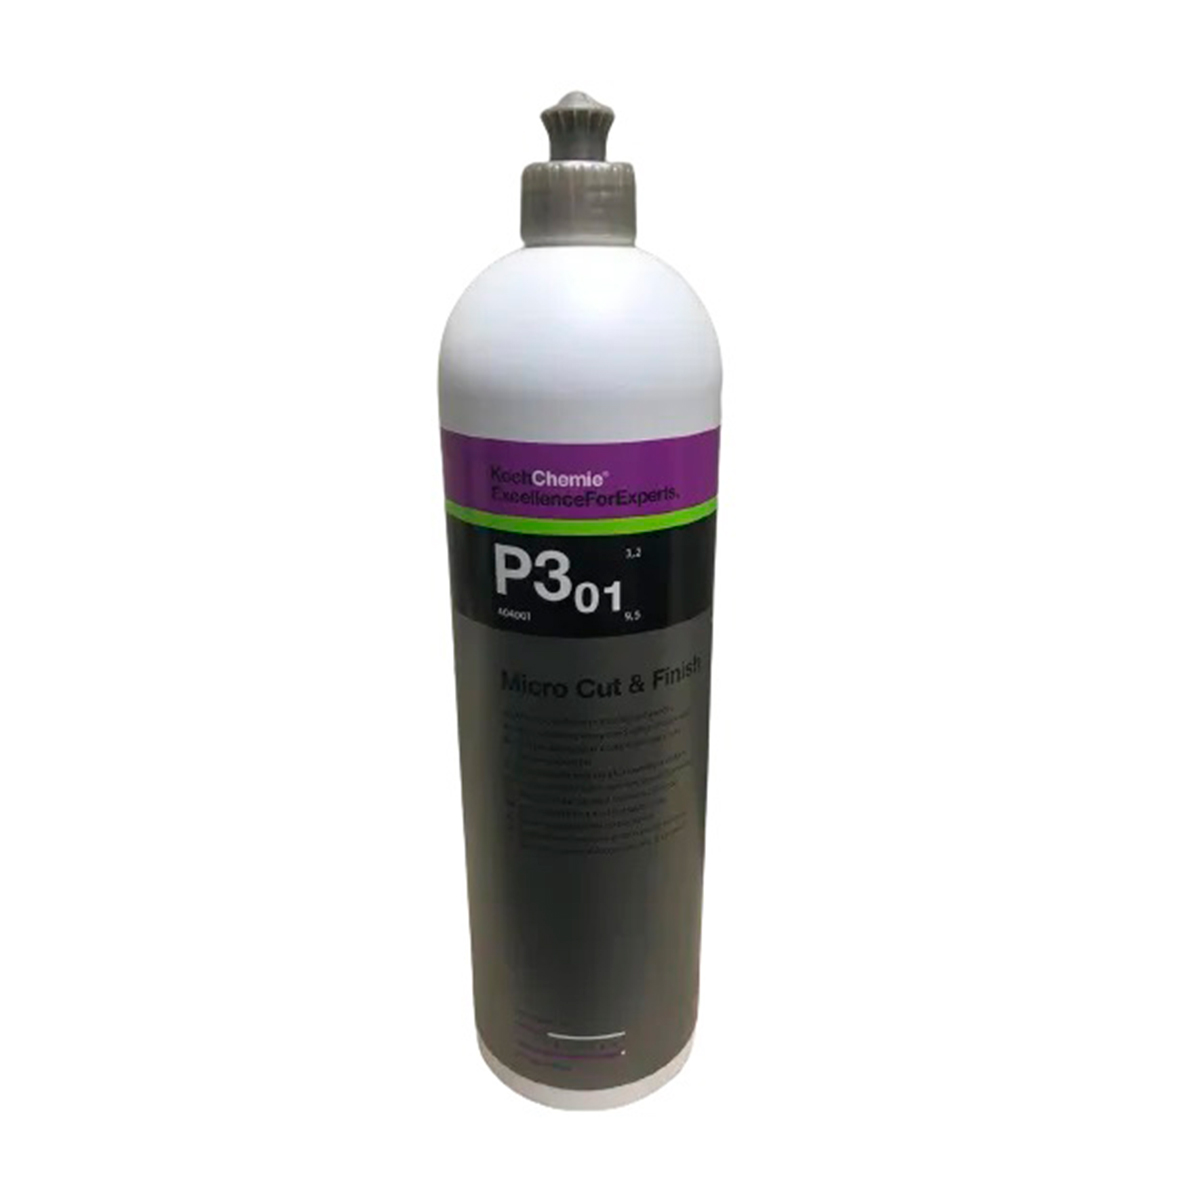 P3 01 Micro Cut e Finish Composto de Polir 250ml - Koch Chemie